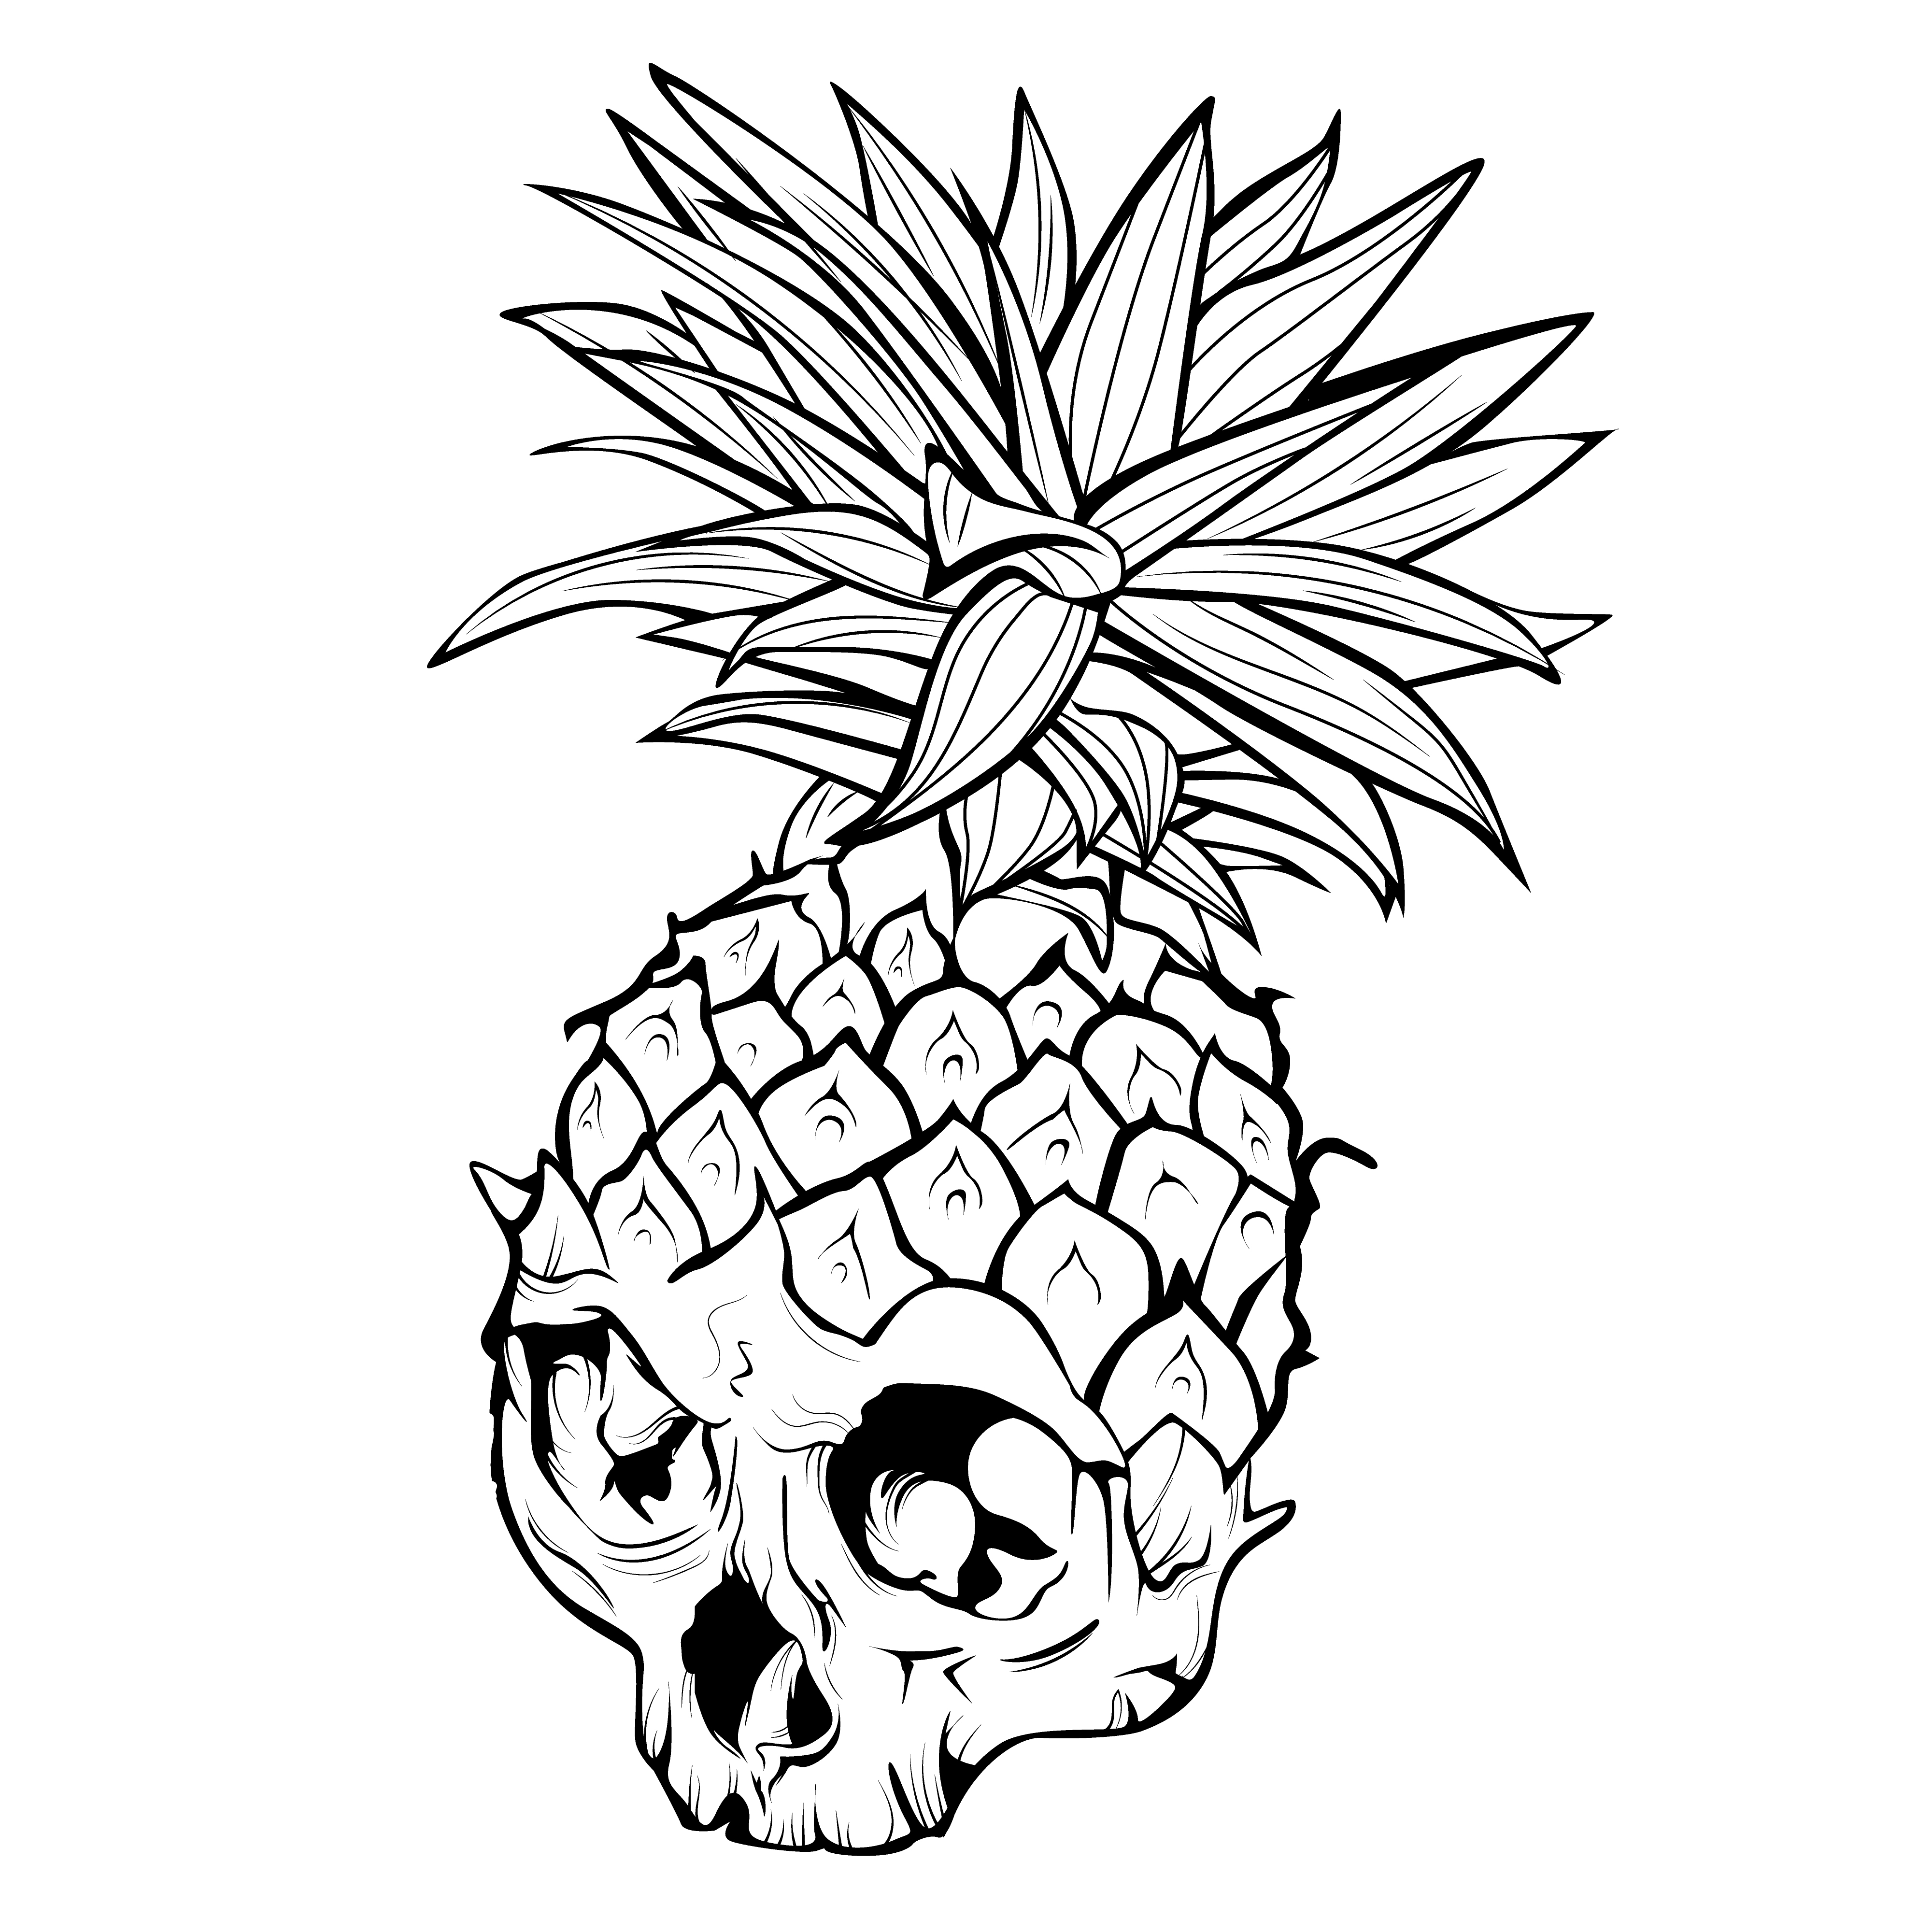 Pineappl outline